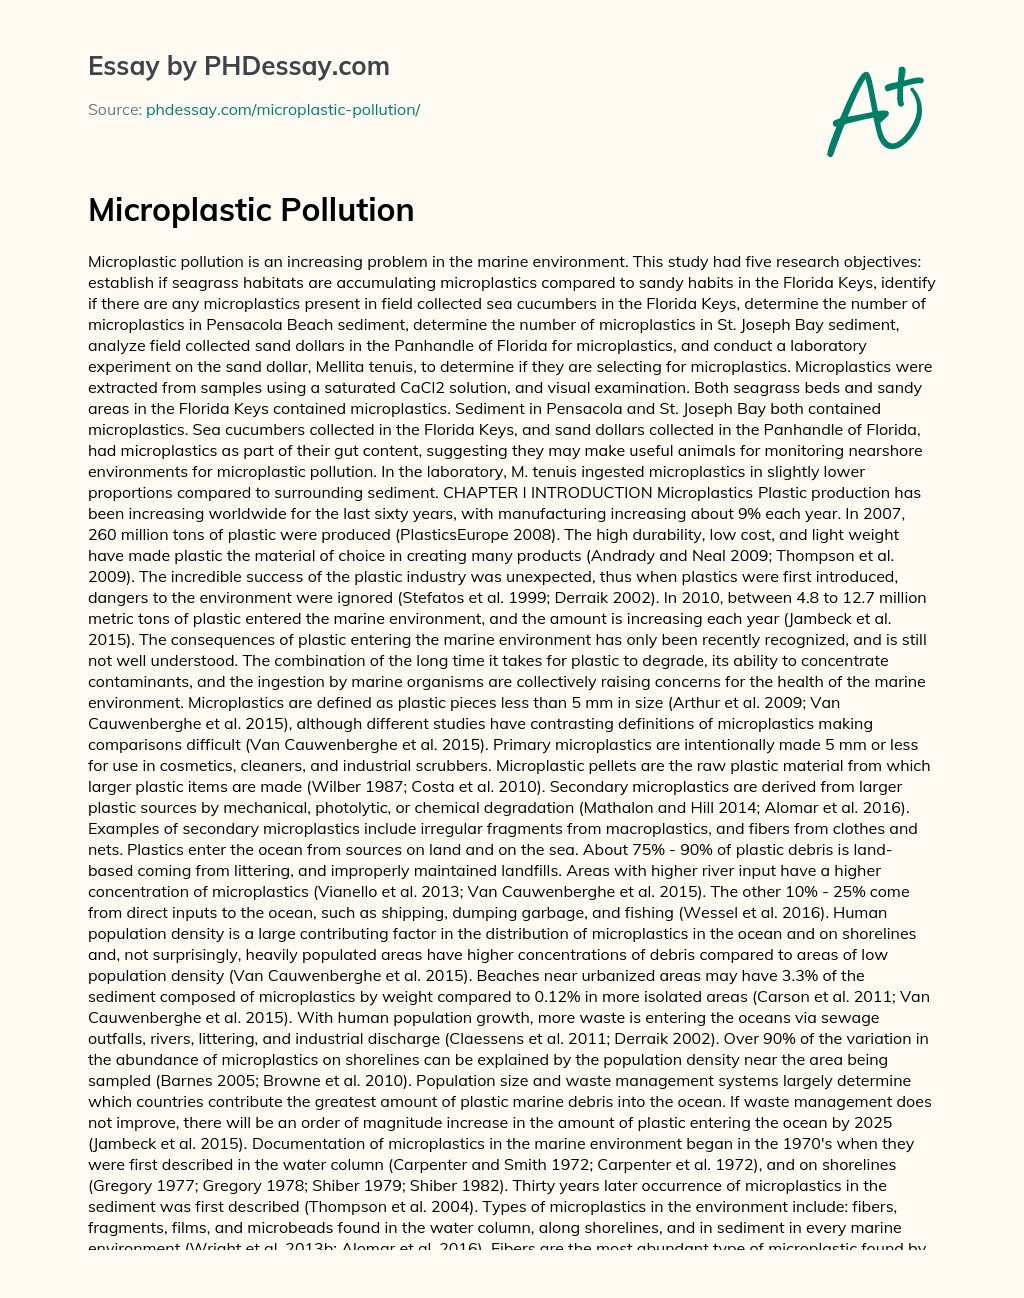 Microplastic Pollution essay